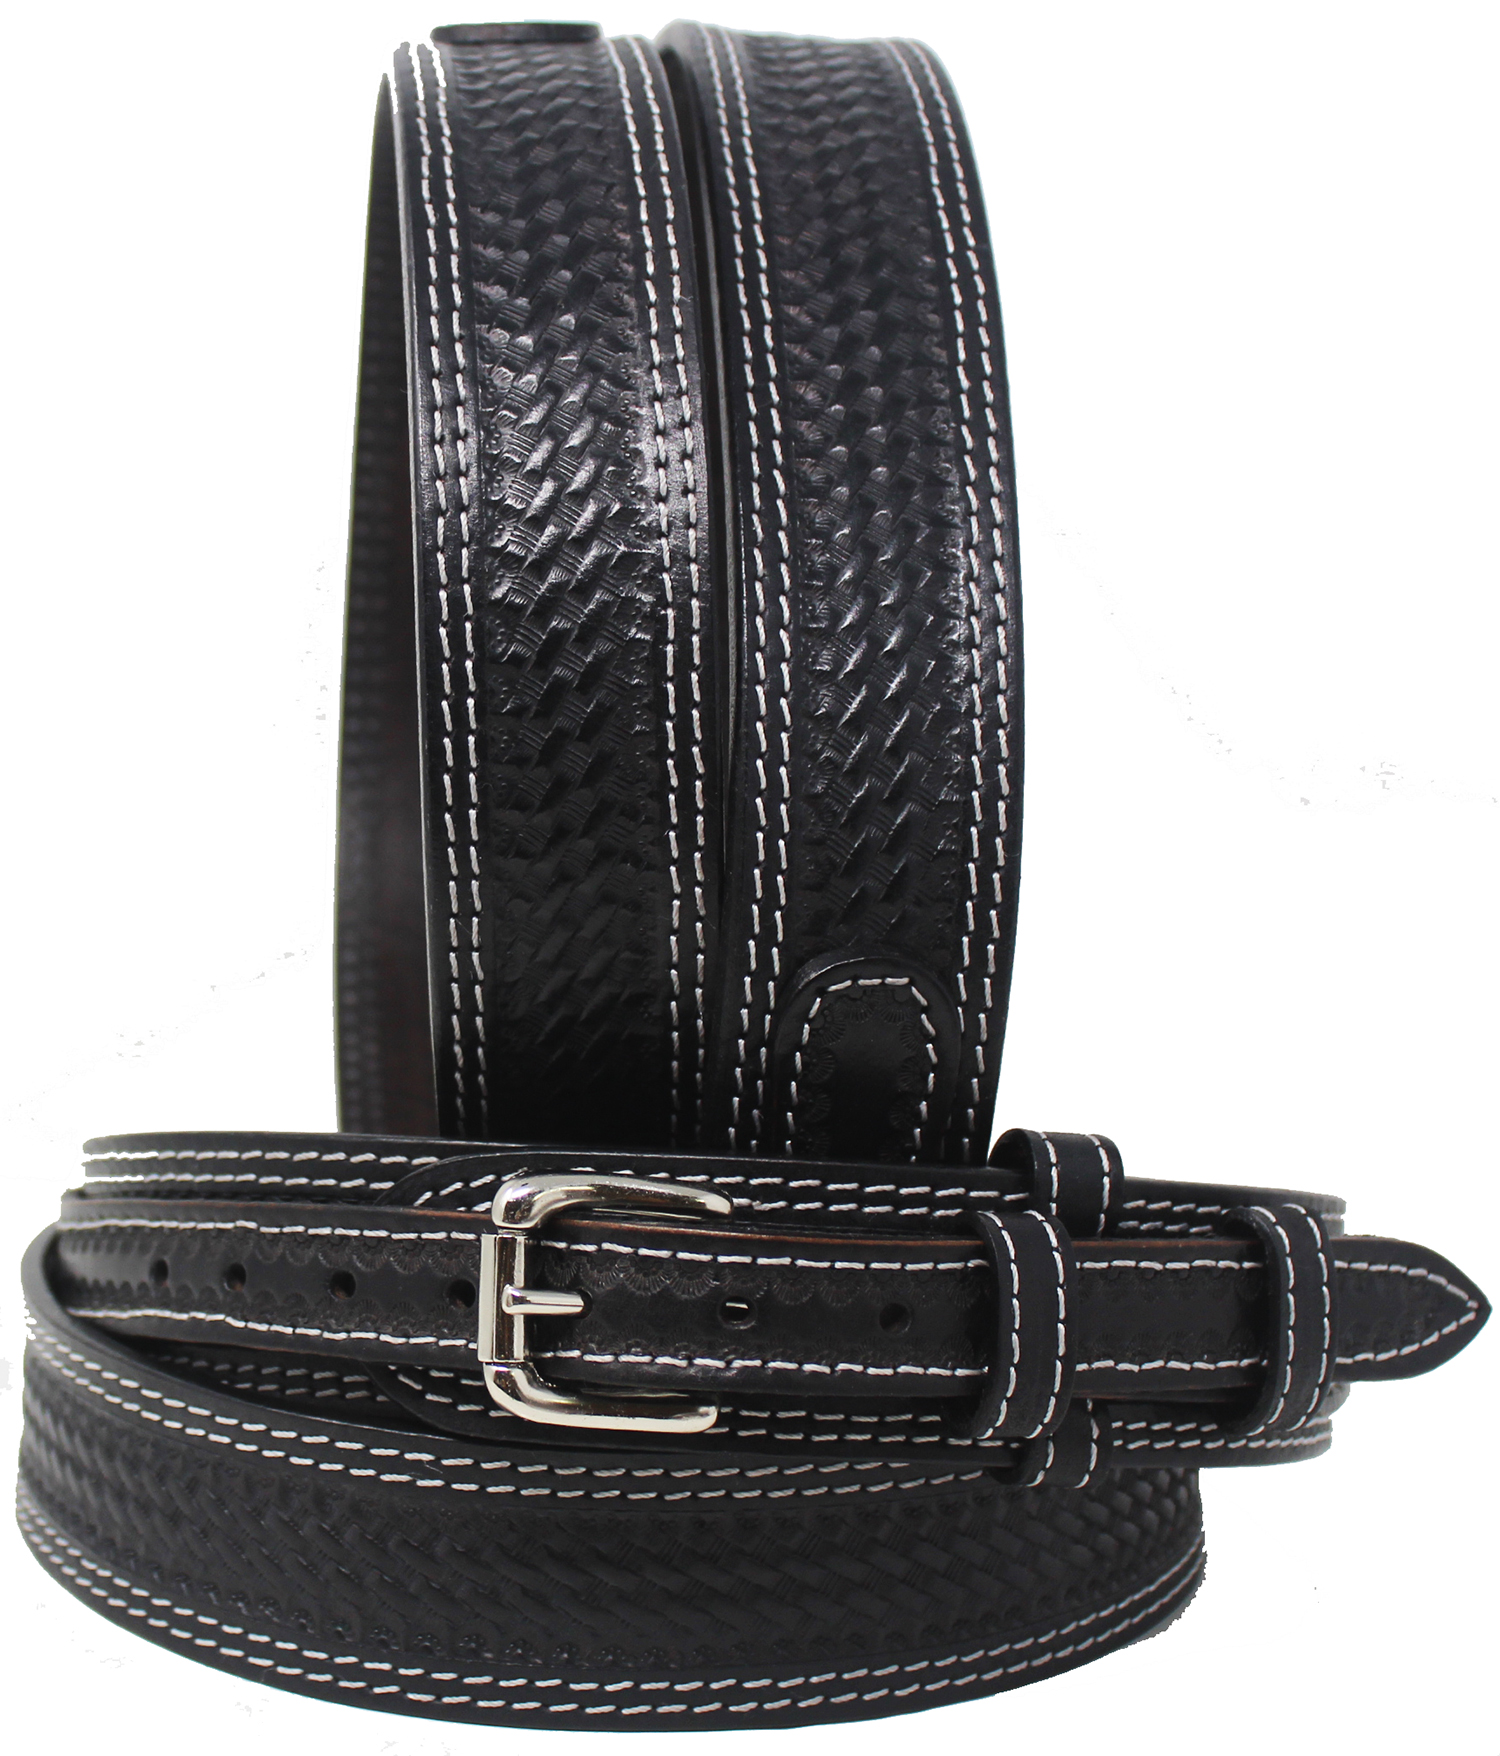 37-38  Men's 100% Leather Double Hole Casual Jean Ranger Belt Cross Black 12RAA23BK - image 4 of 5